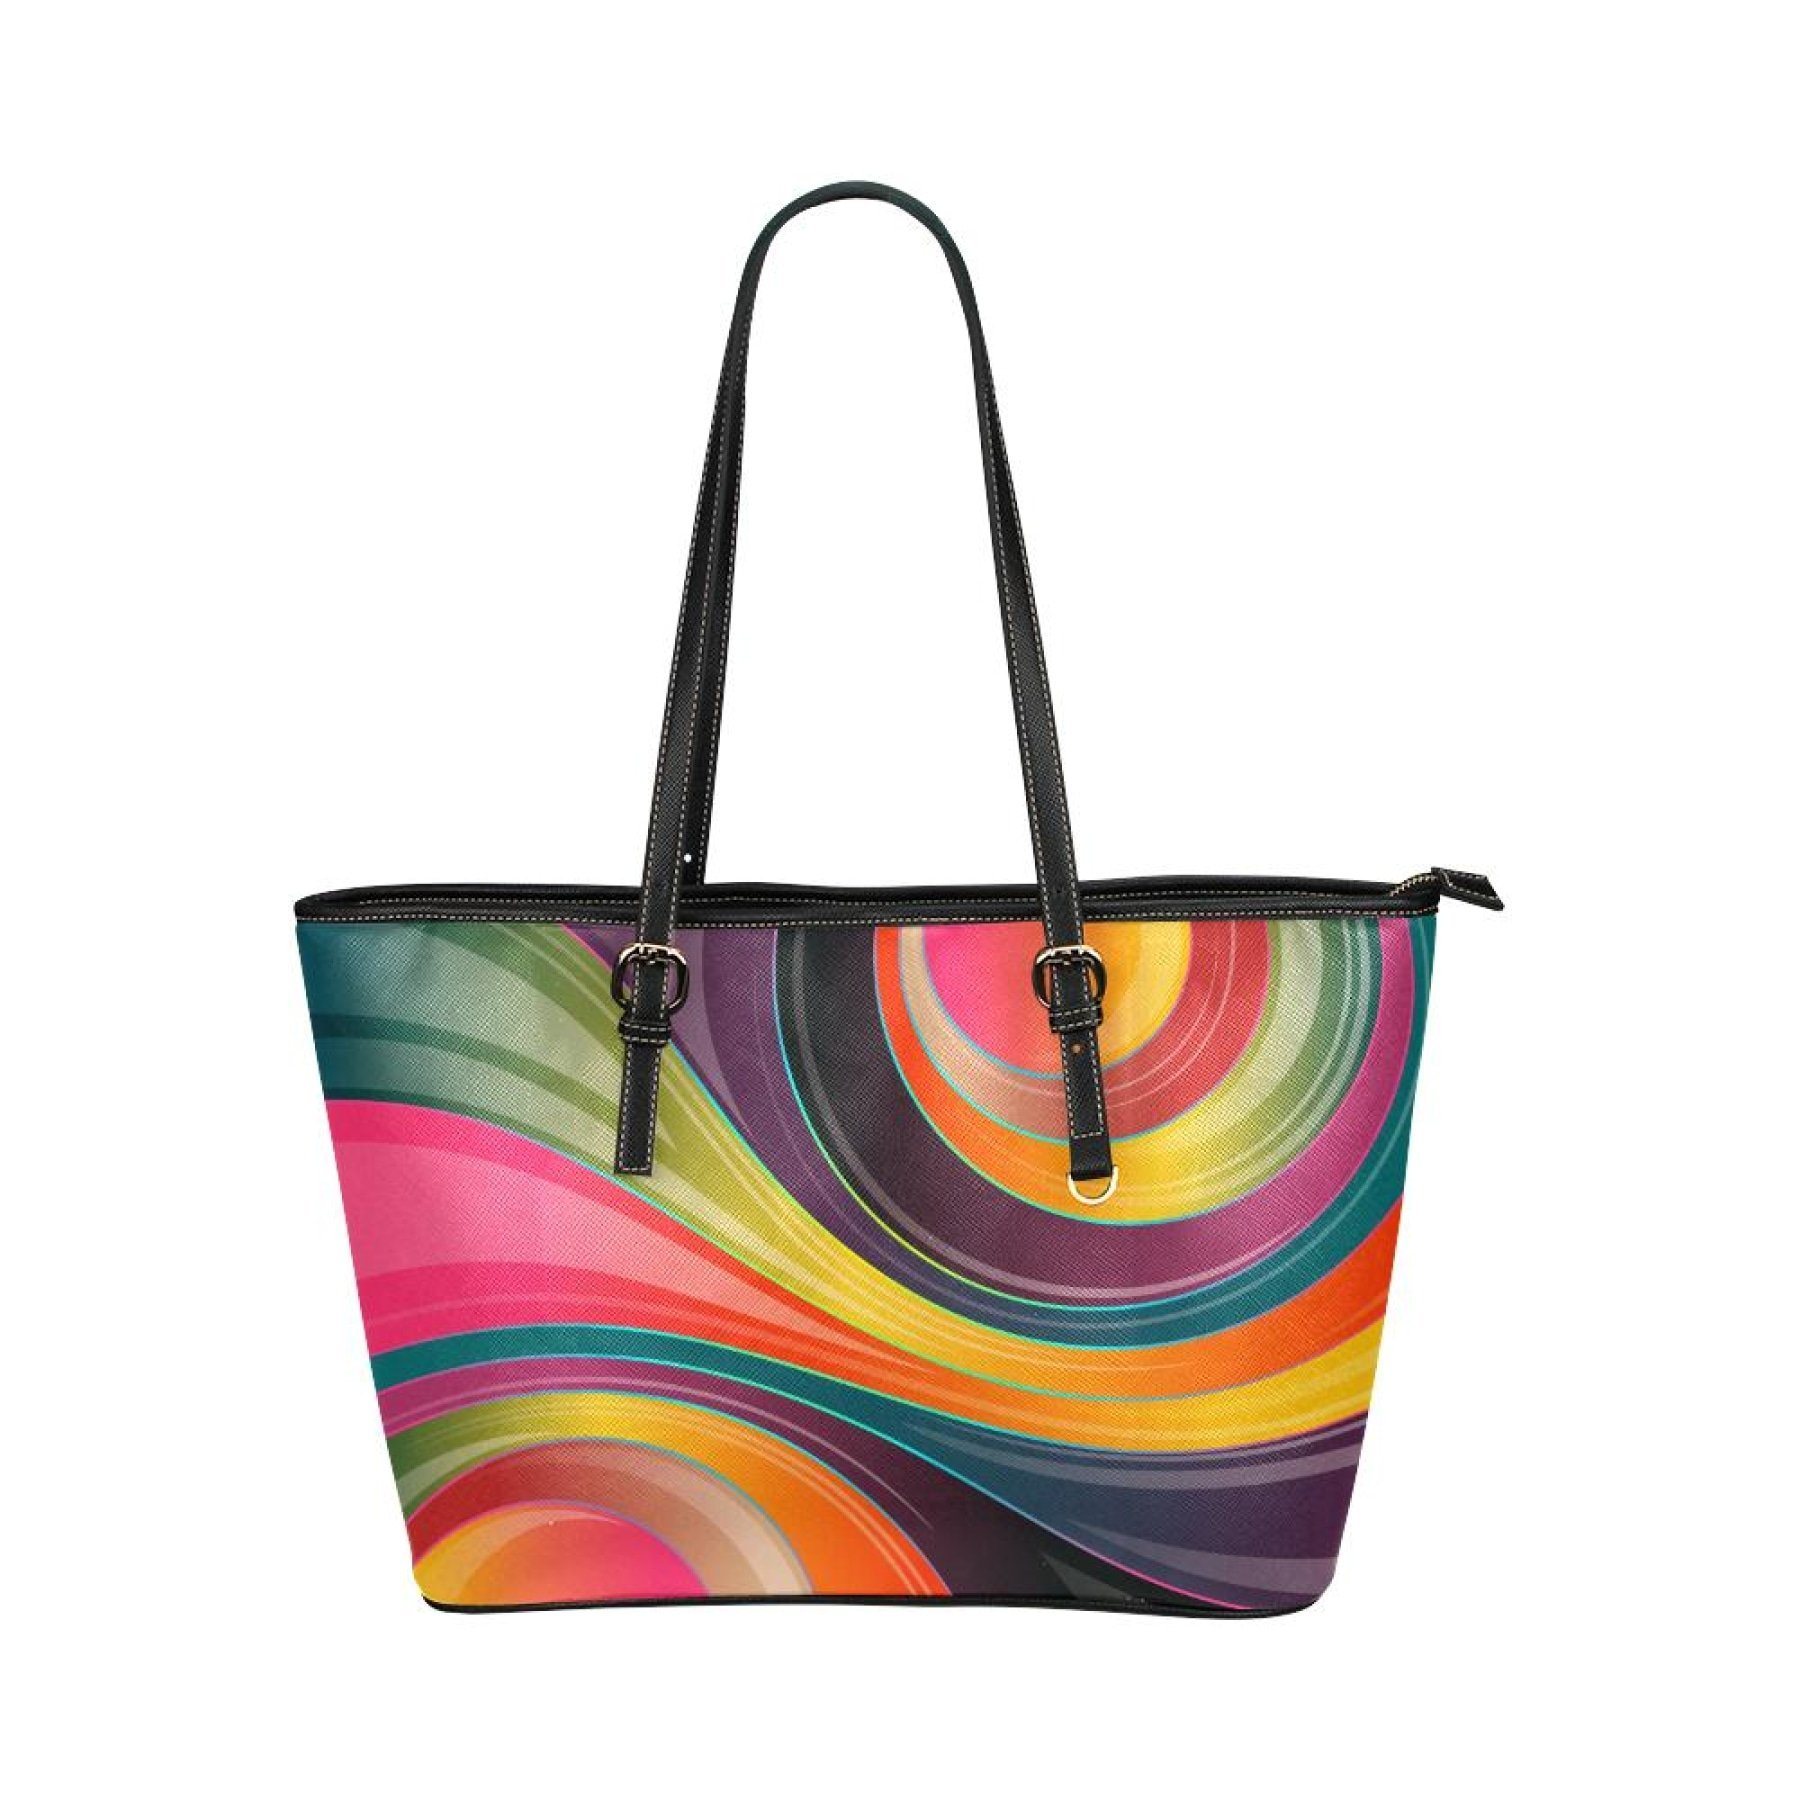 Colorful Circular Geometric Style Tote Bag 14